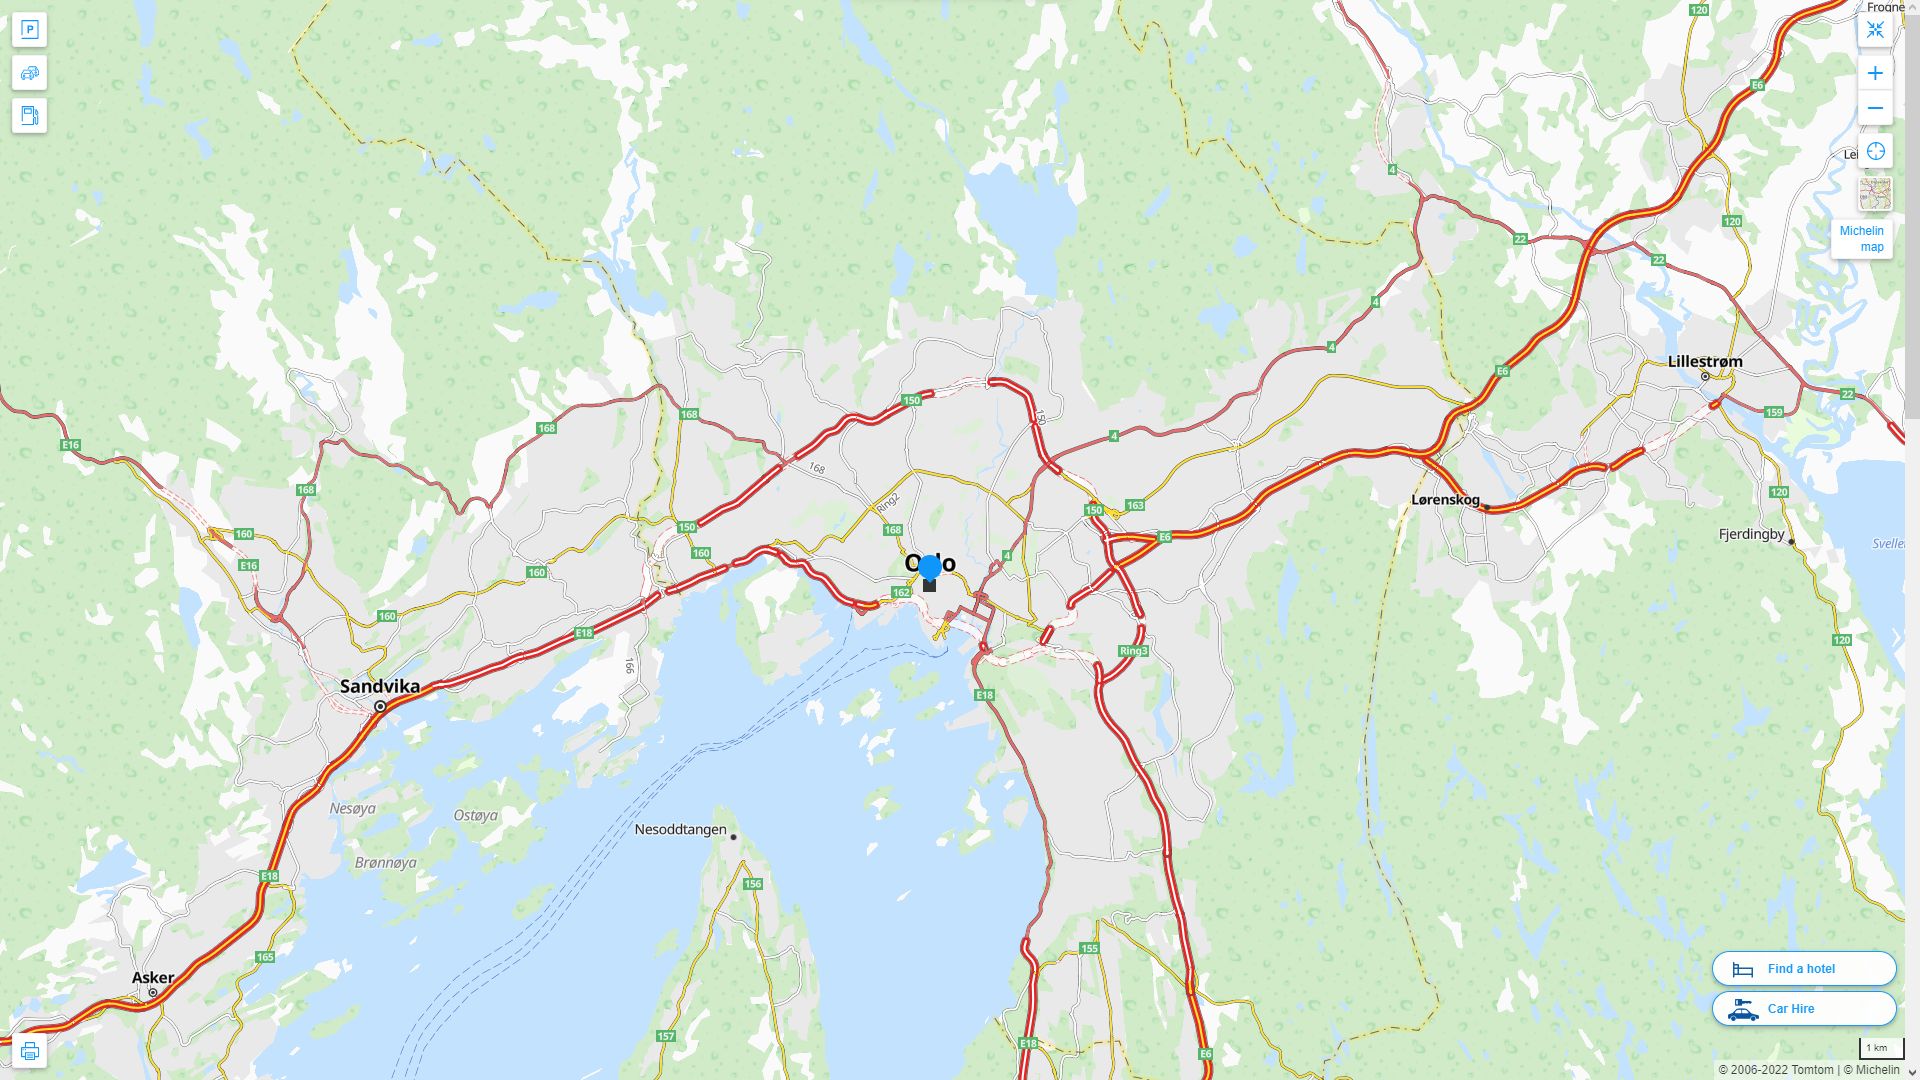 Oslo Norvege Autoroute et carte routiere